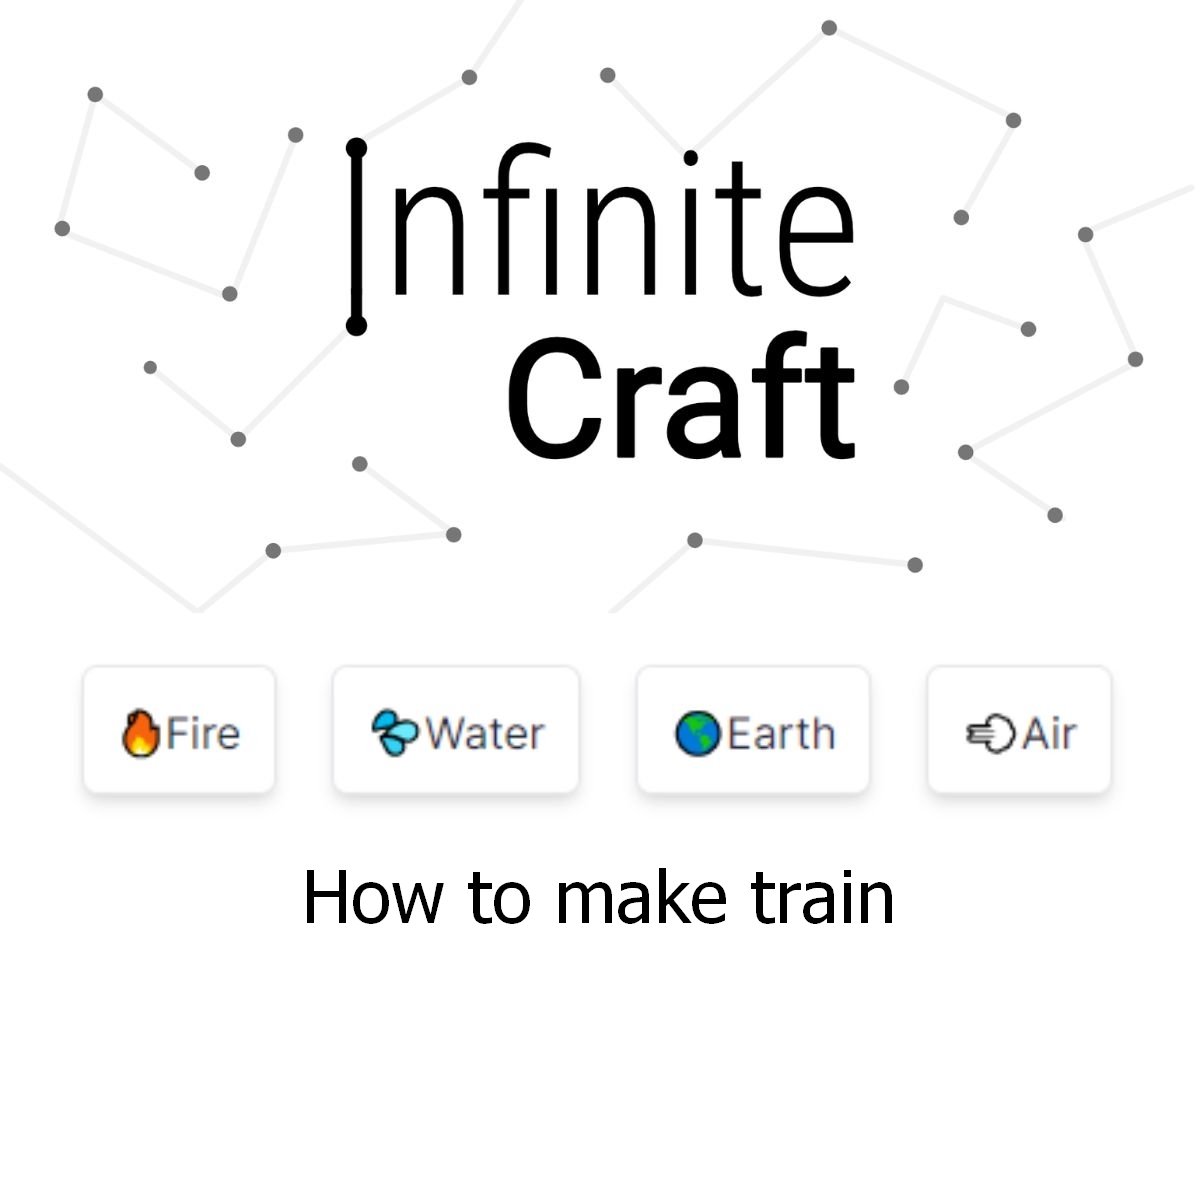 how to make train in infinite craft